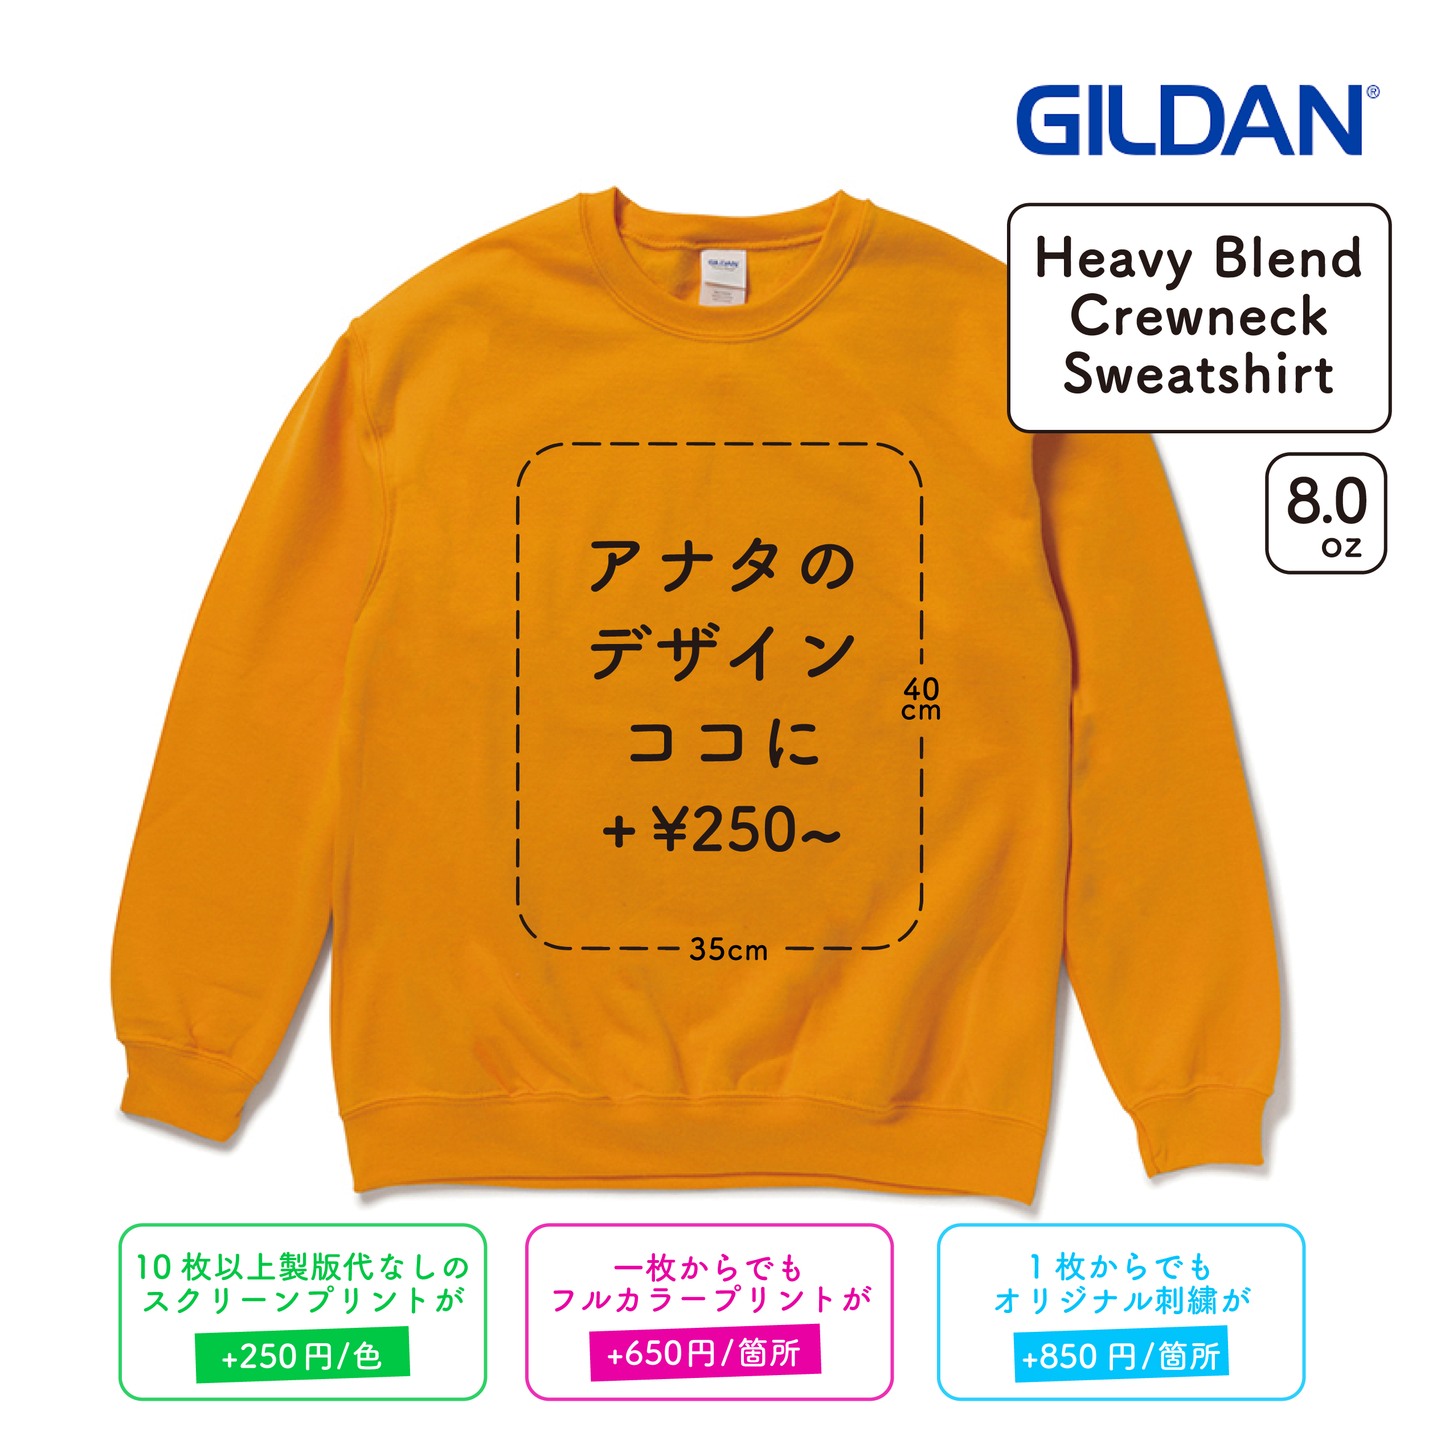 8.0 oz Heavy Blend Crewneck Sweatshirt (GIL-18000)